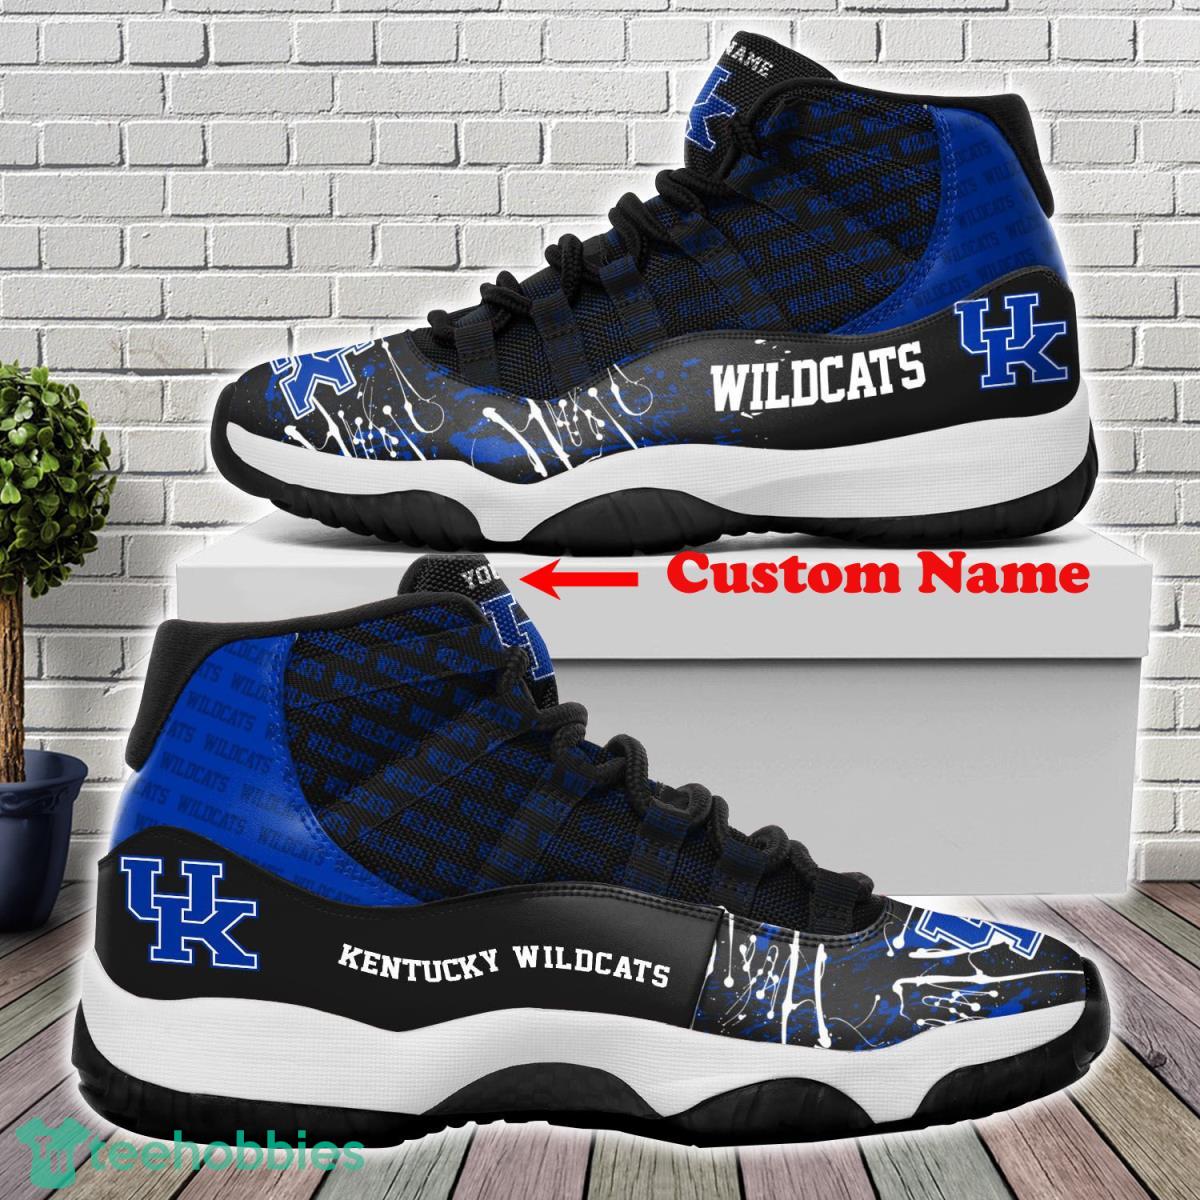 Kentucky Wildcats Custom Name Air Jordan 11 Sneakers For Fans Product Photo 1